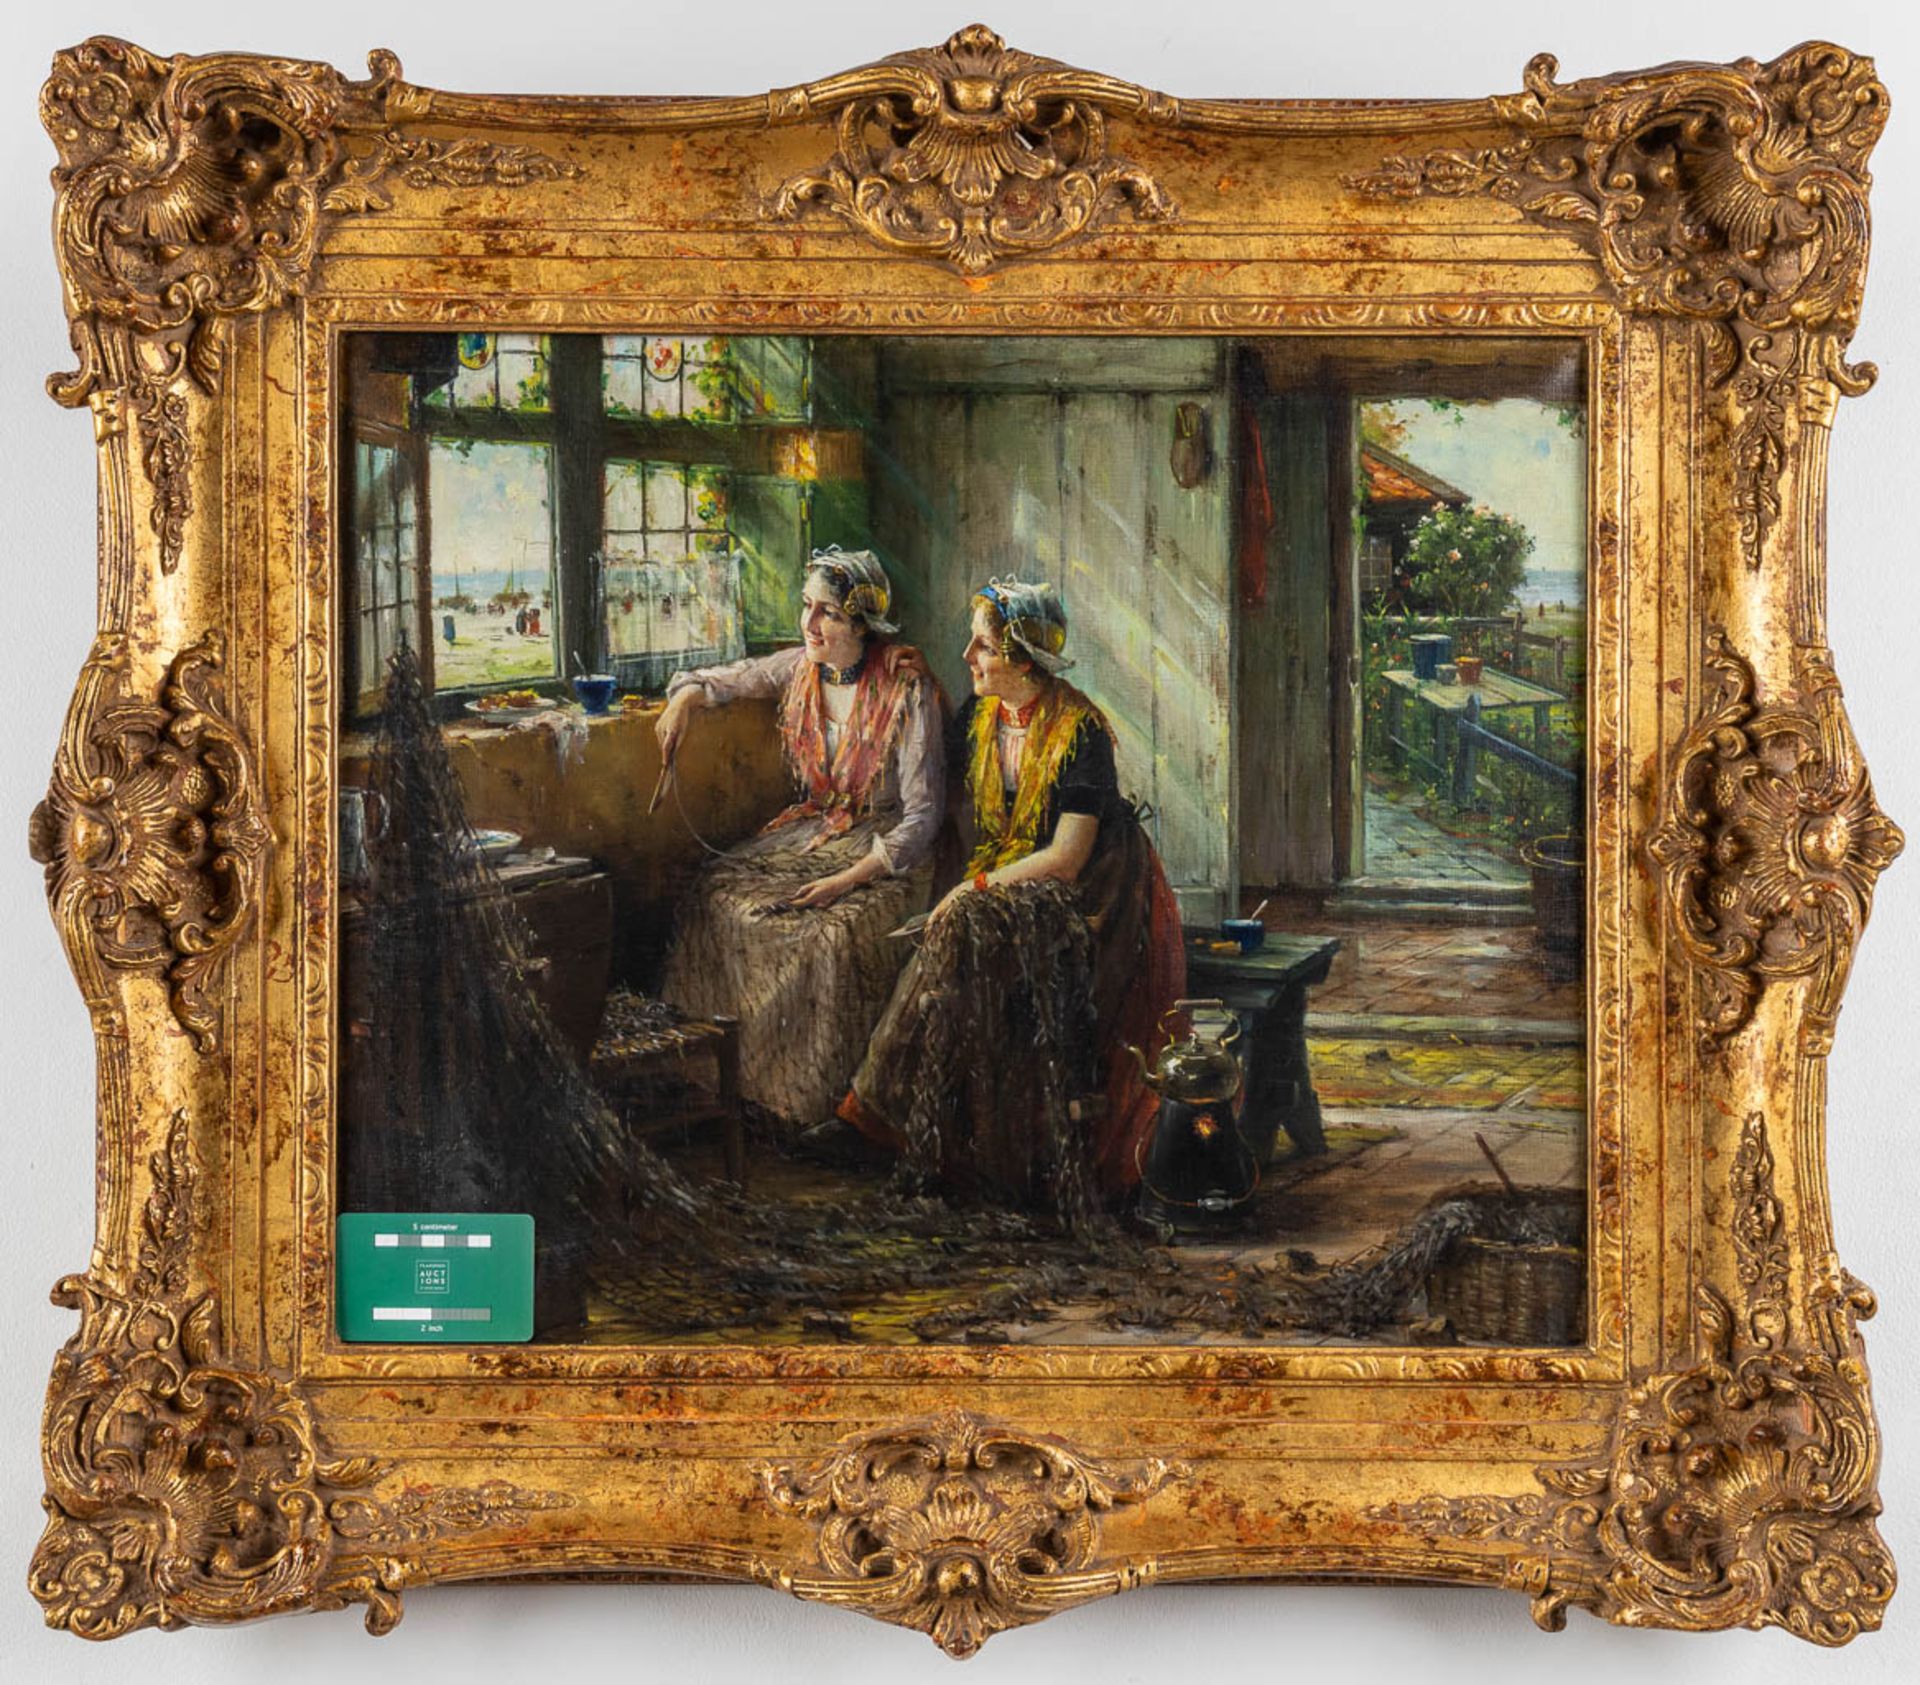 Edward Antoon PORTIELJE (1861-1949) 'Girls by the Window' oil on canvas. (W:55 x H:45 cm) - Image 2 of 9